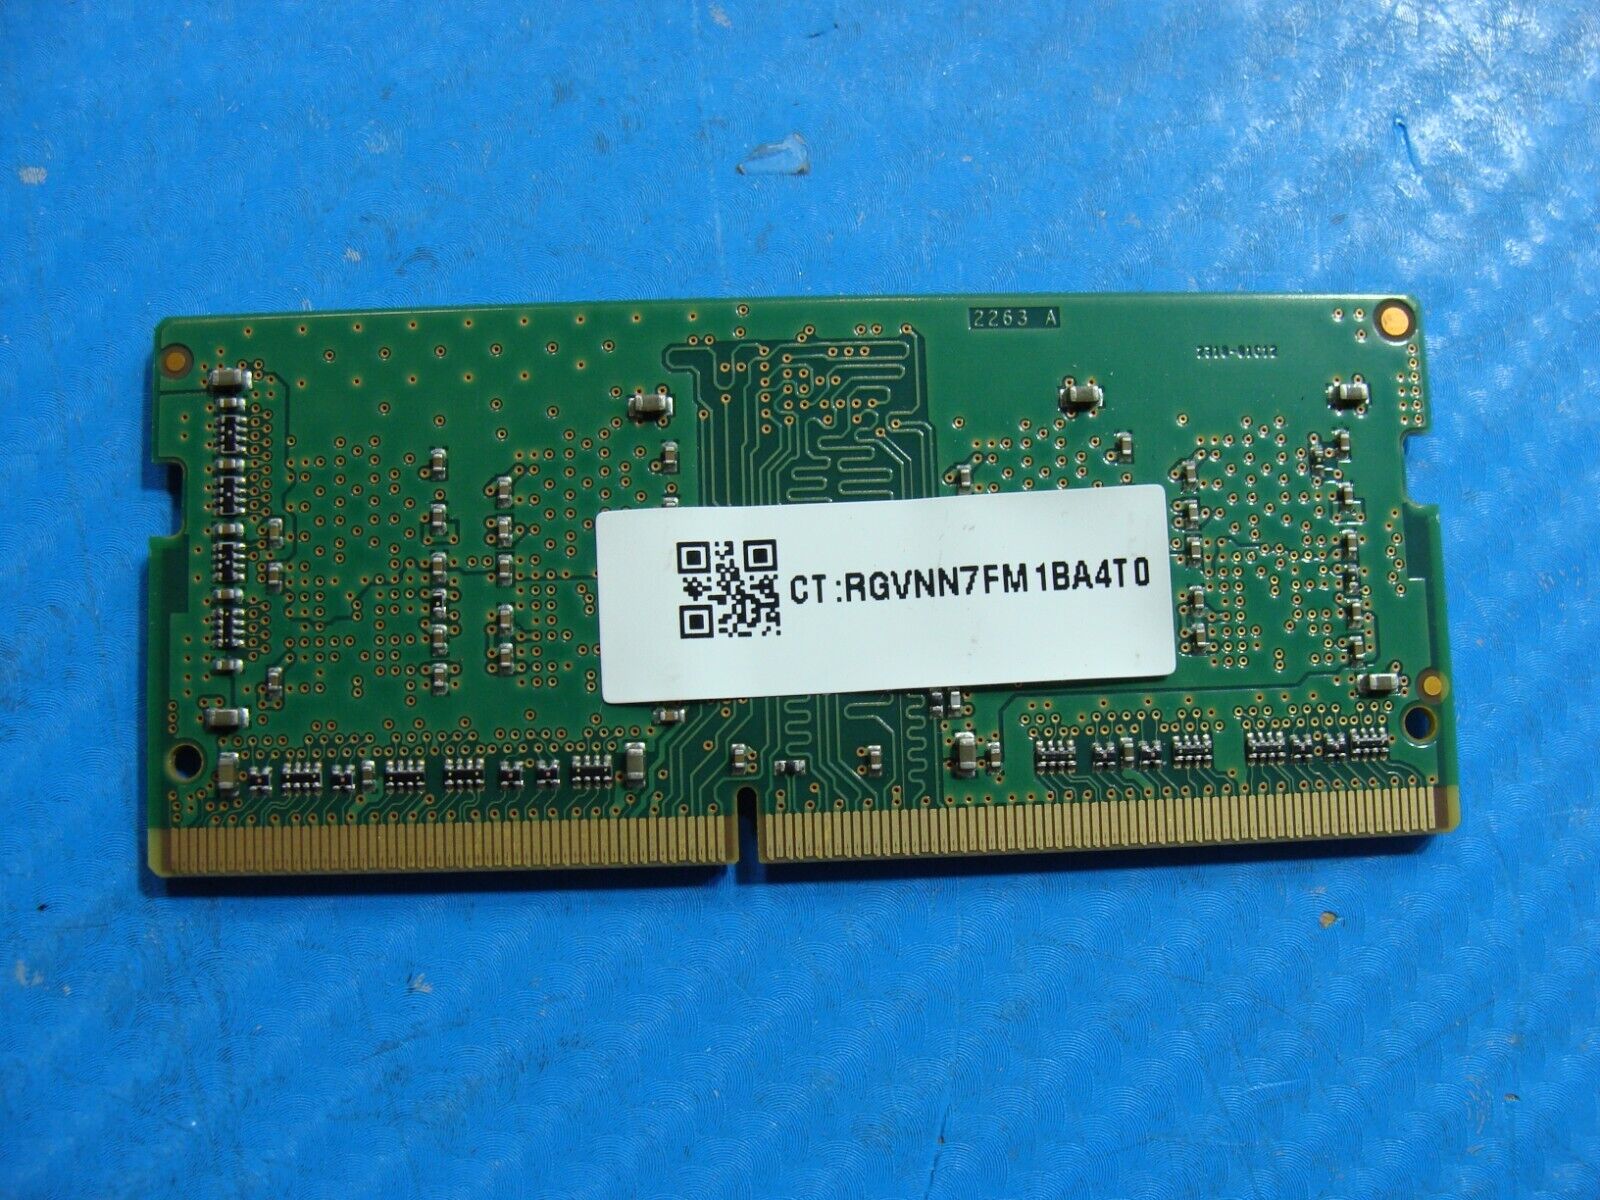 HP 15-cs0053cl Micron 4GB 1Rx16 PC4-2666 Memory RAM SO-DIMM MTA4ATF51264HZ-2G6E1